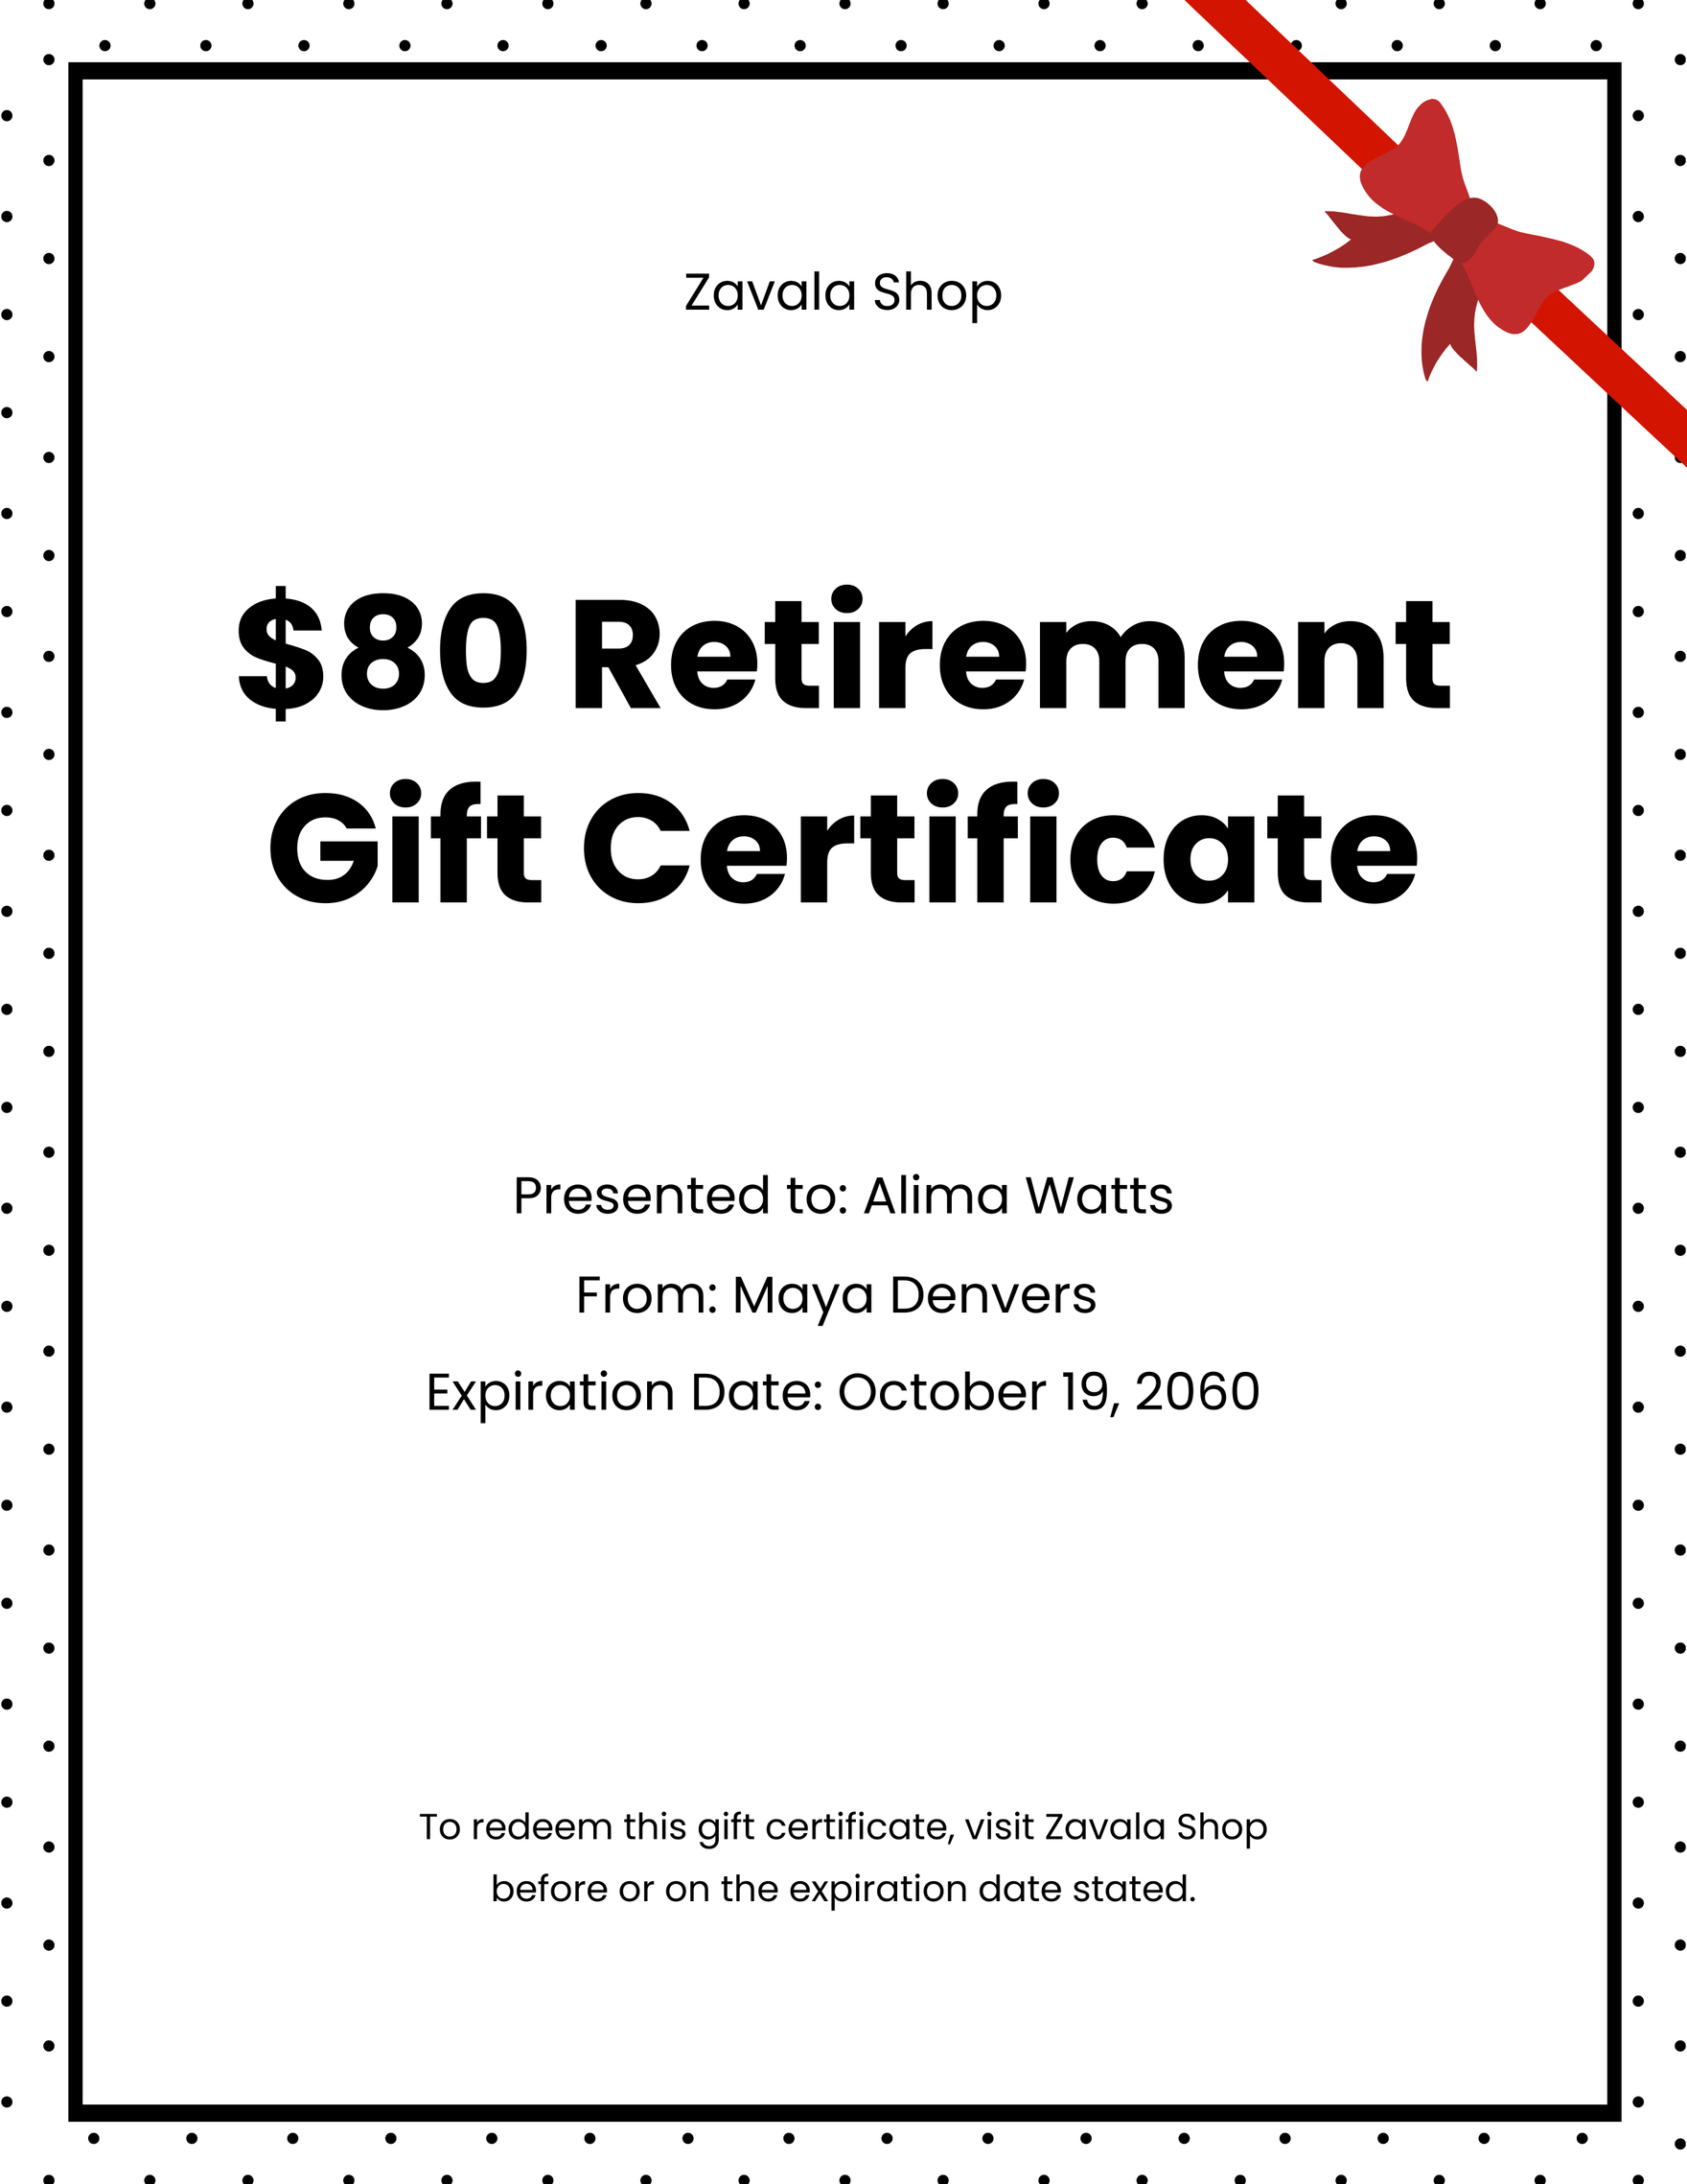 Free Retirement Gift Certificate